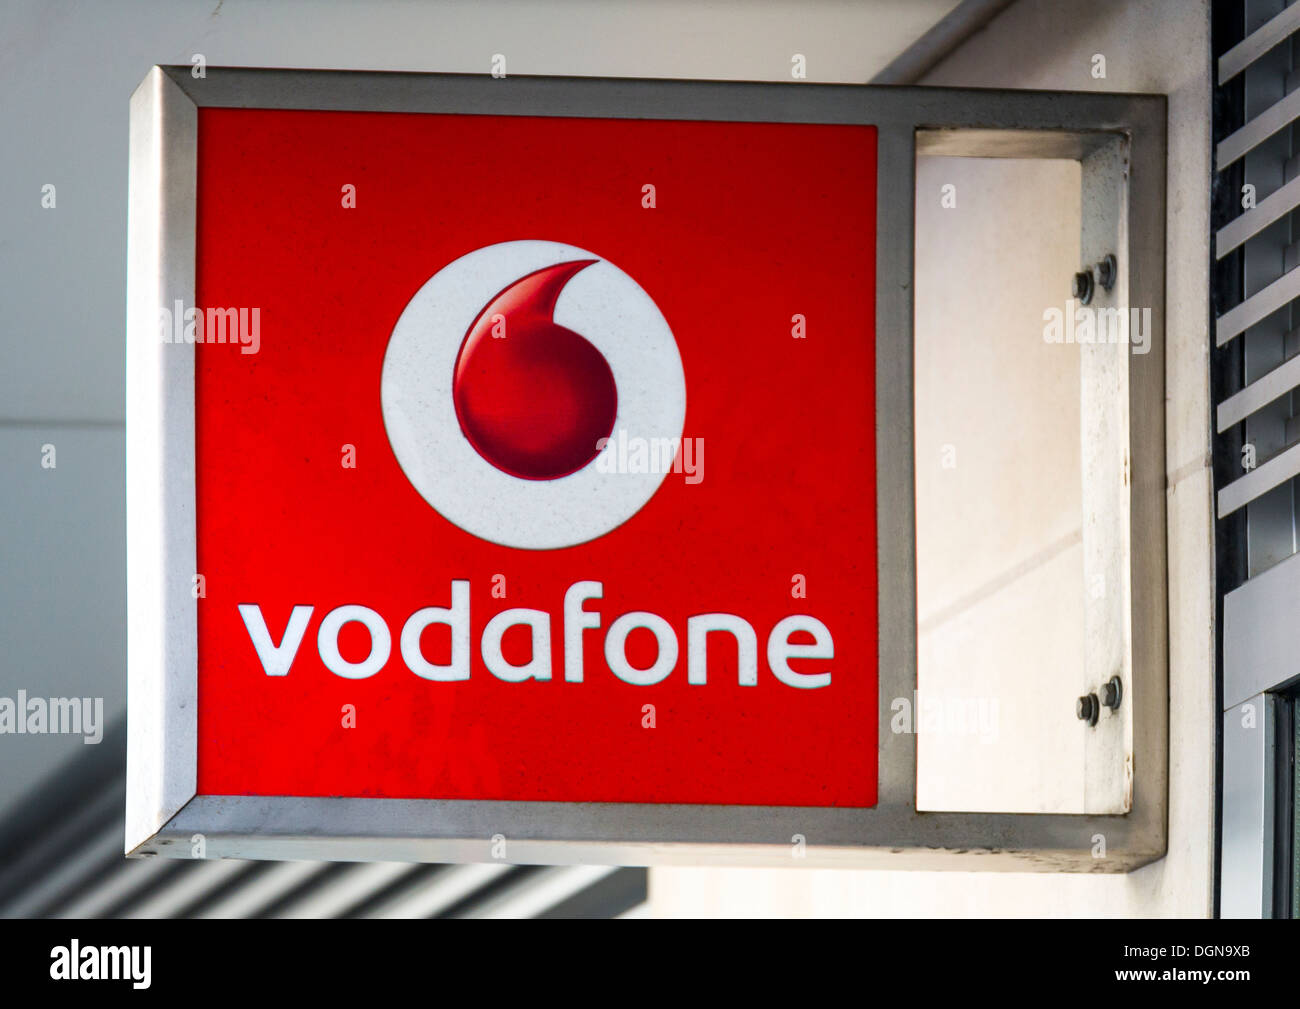 Vodafone Mobile Phone Shop Sign. Stock Photo